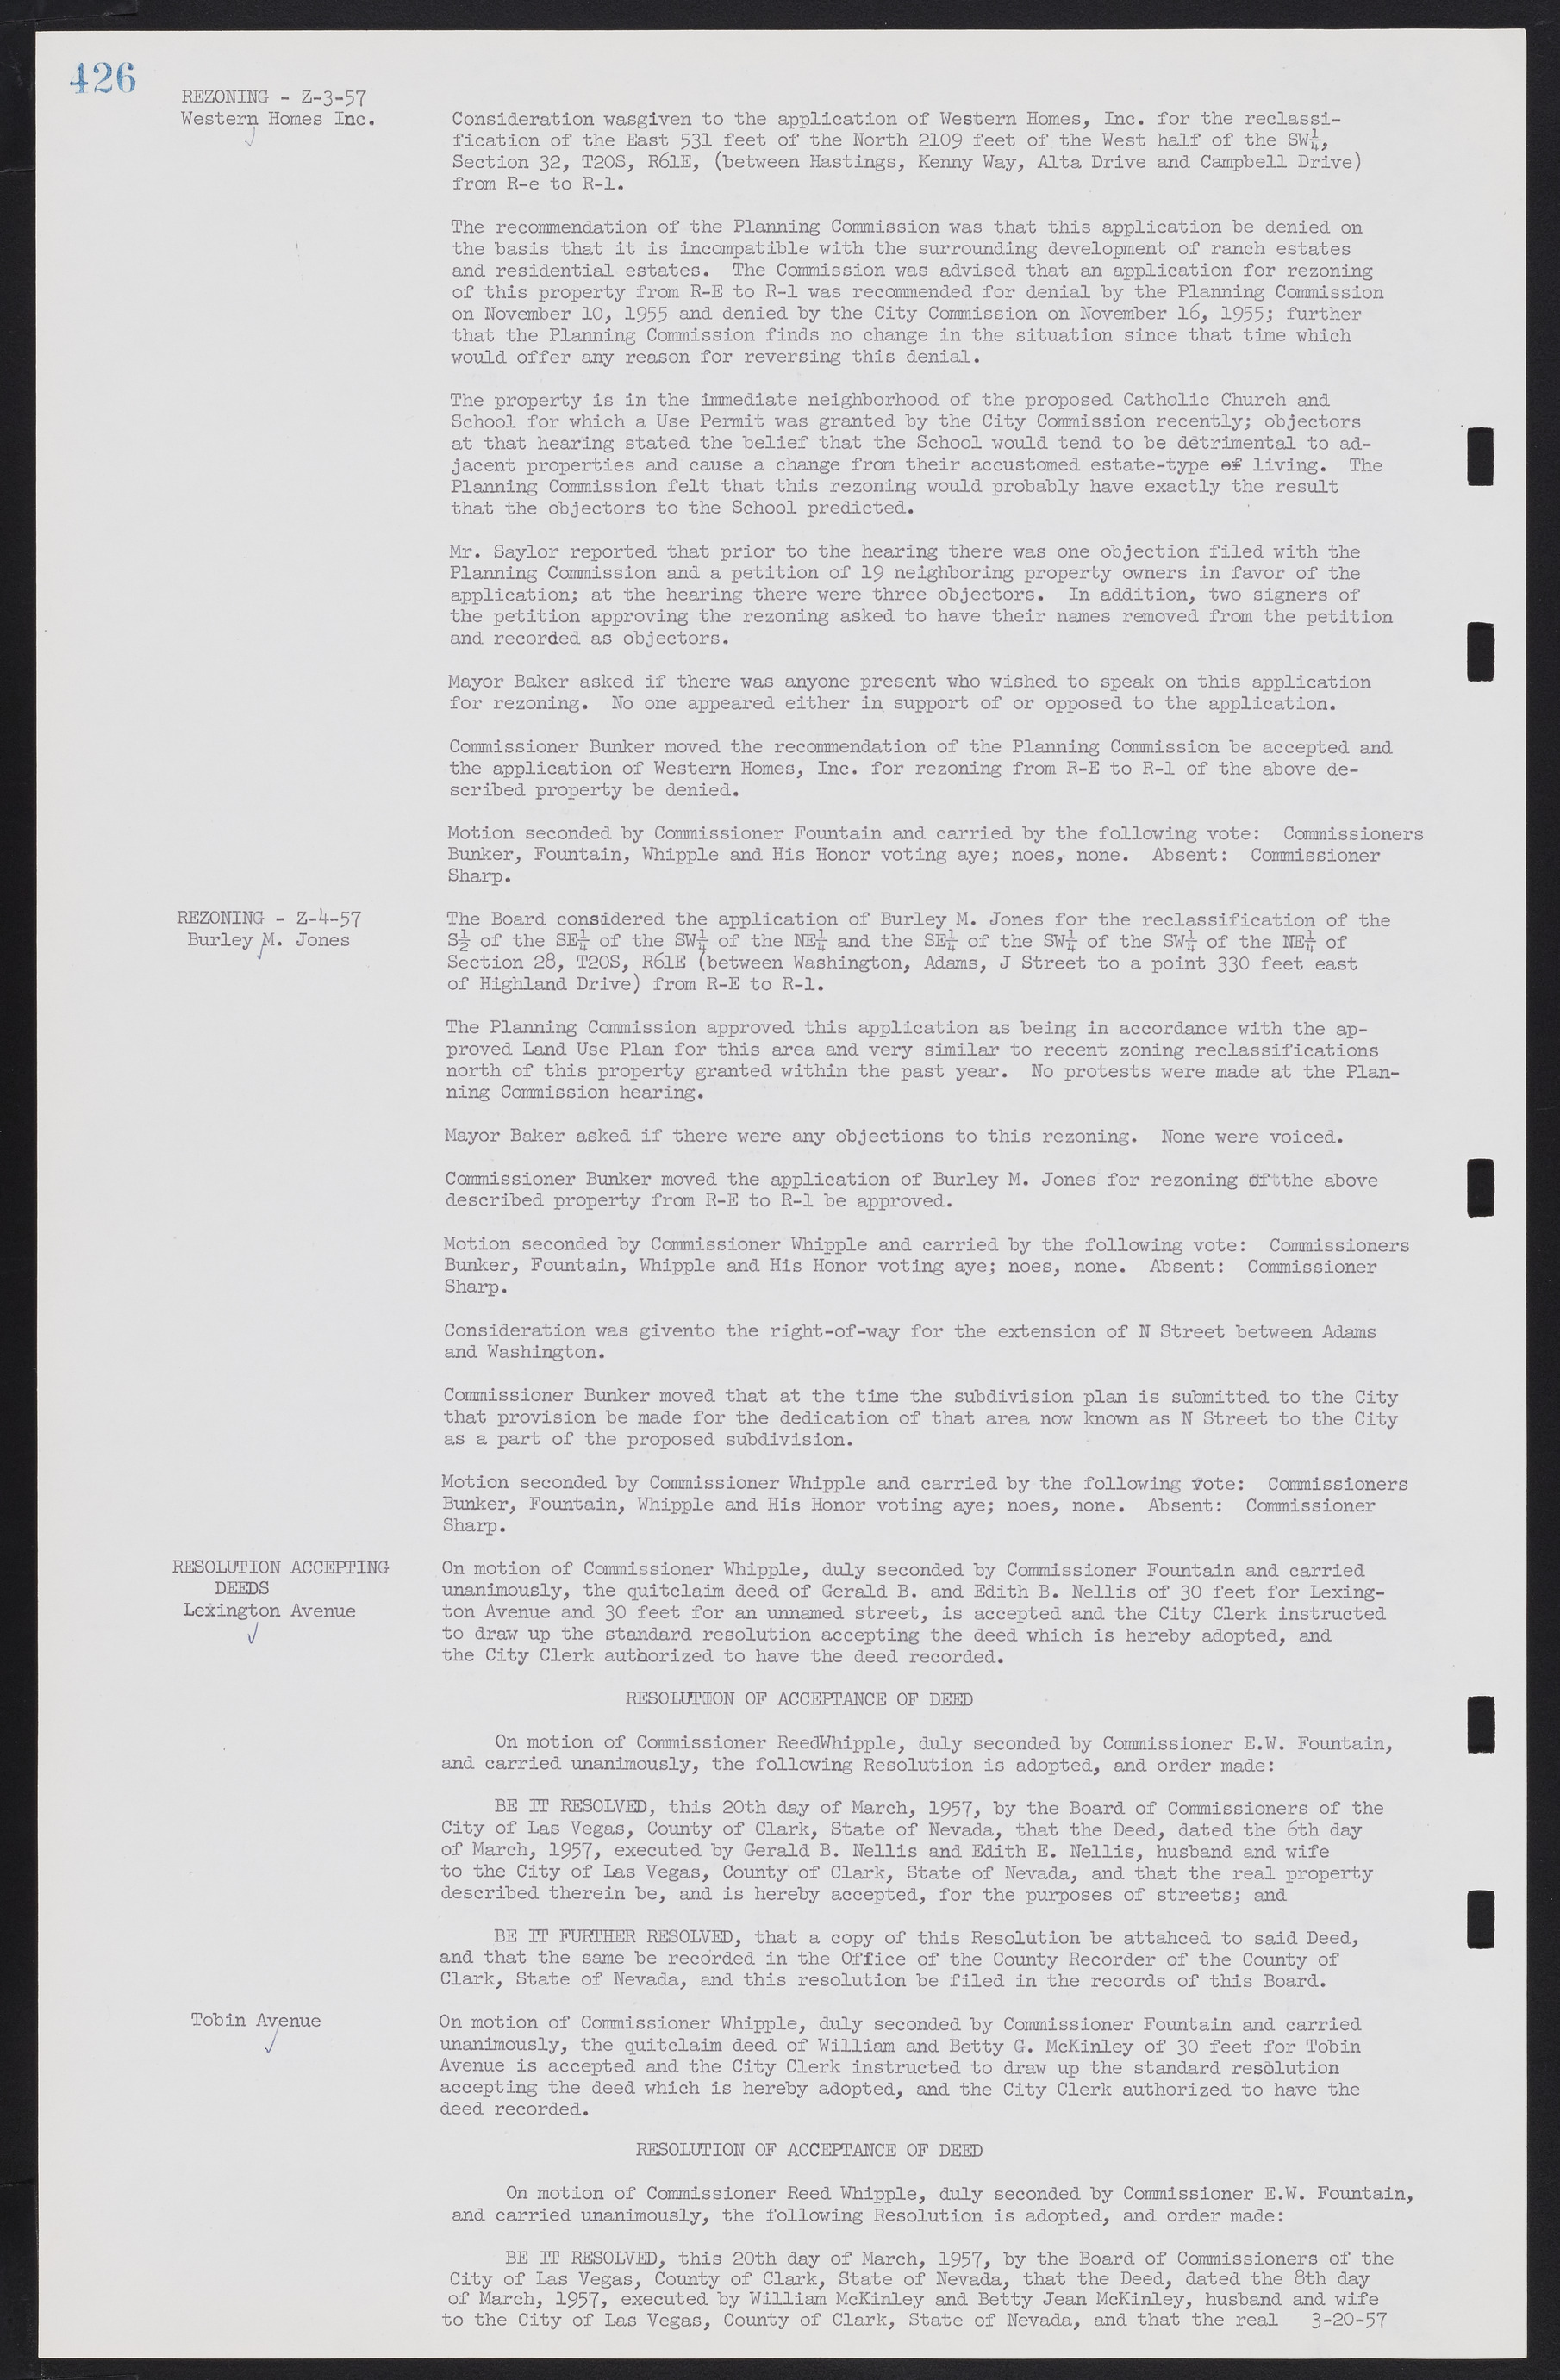 Las Vegas City Commission Minutes, September 21, 1955 to November 20, 1957, lvc000010-446